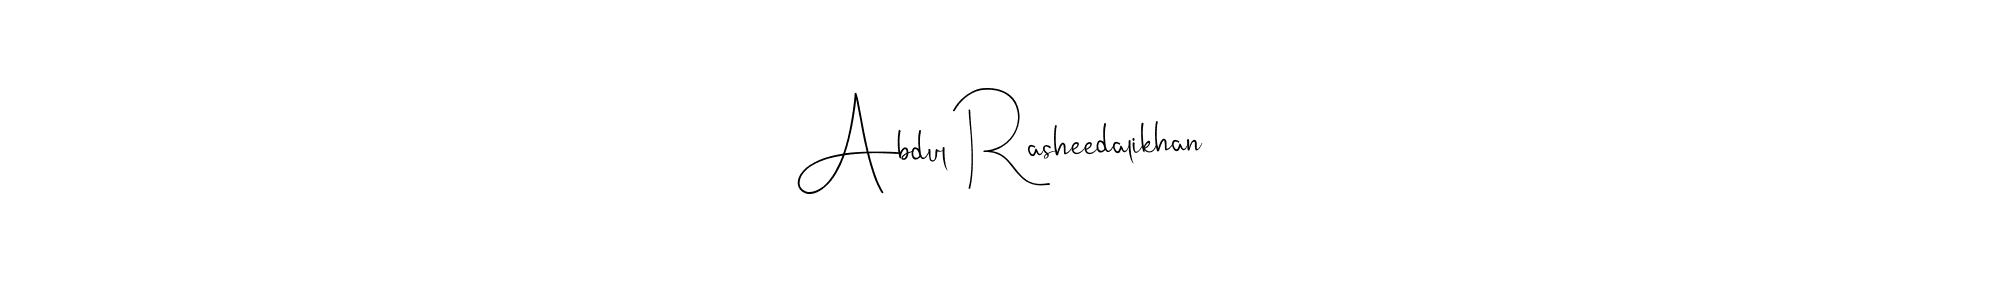 How to Draw Abdul Rasheedalikhan signature style? Andilay-7BmLP is a latest design signature styles for name Abdul Rasheedalikhan. Abdul Rasheedalikhan signature style 4 images and pictures png